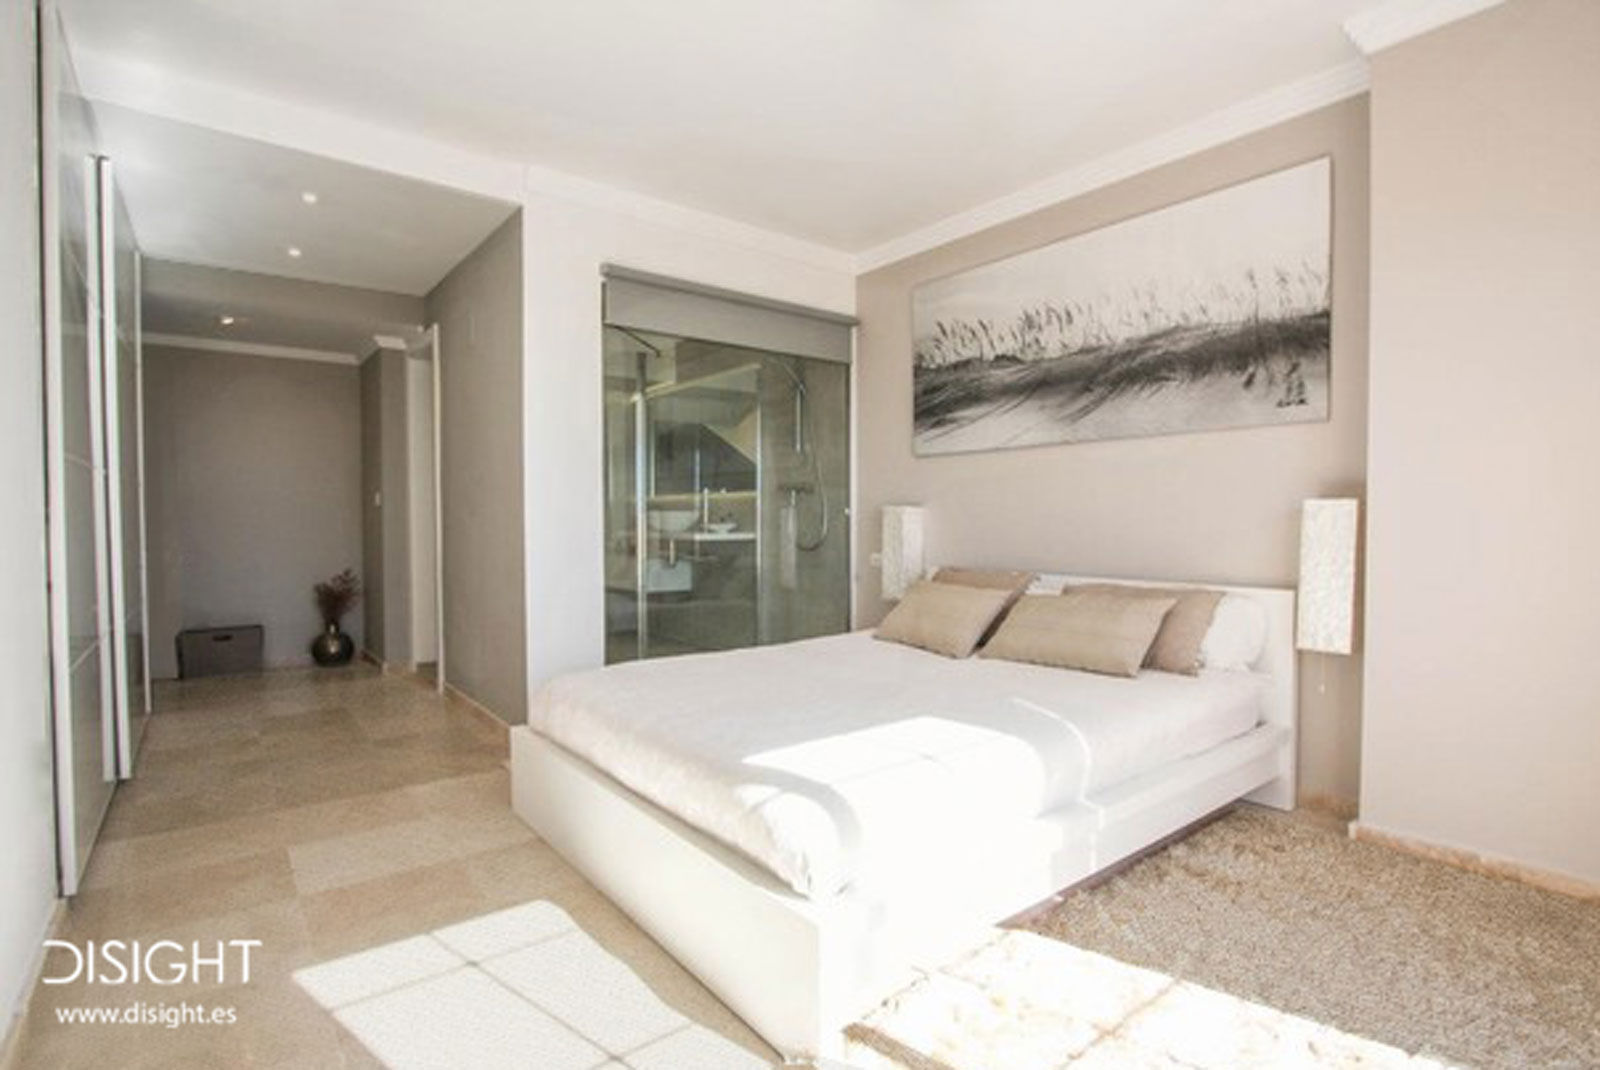 Residencial Atico Rio Real Marbella, DISIGHT DISIGHT Phòng ngủ phong cách tối giản